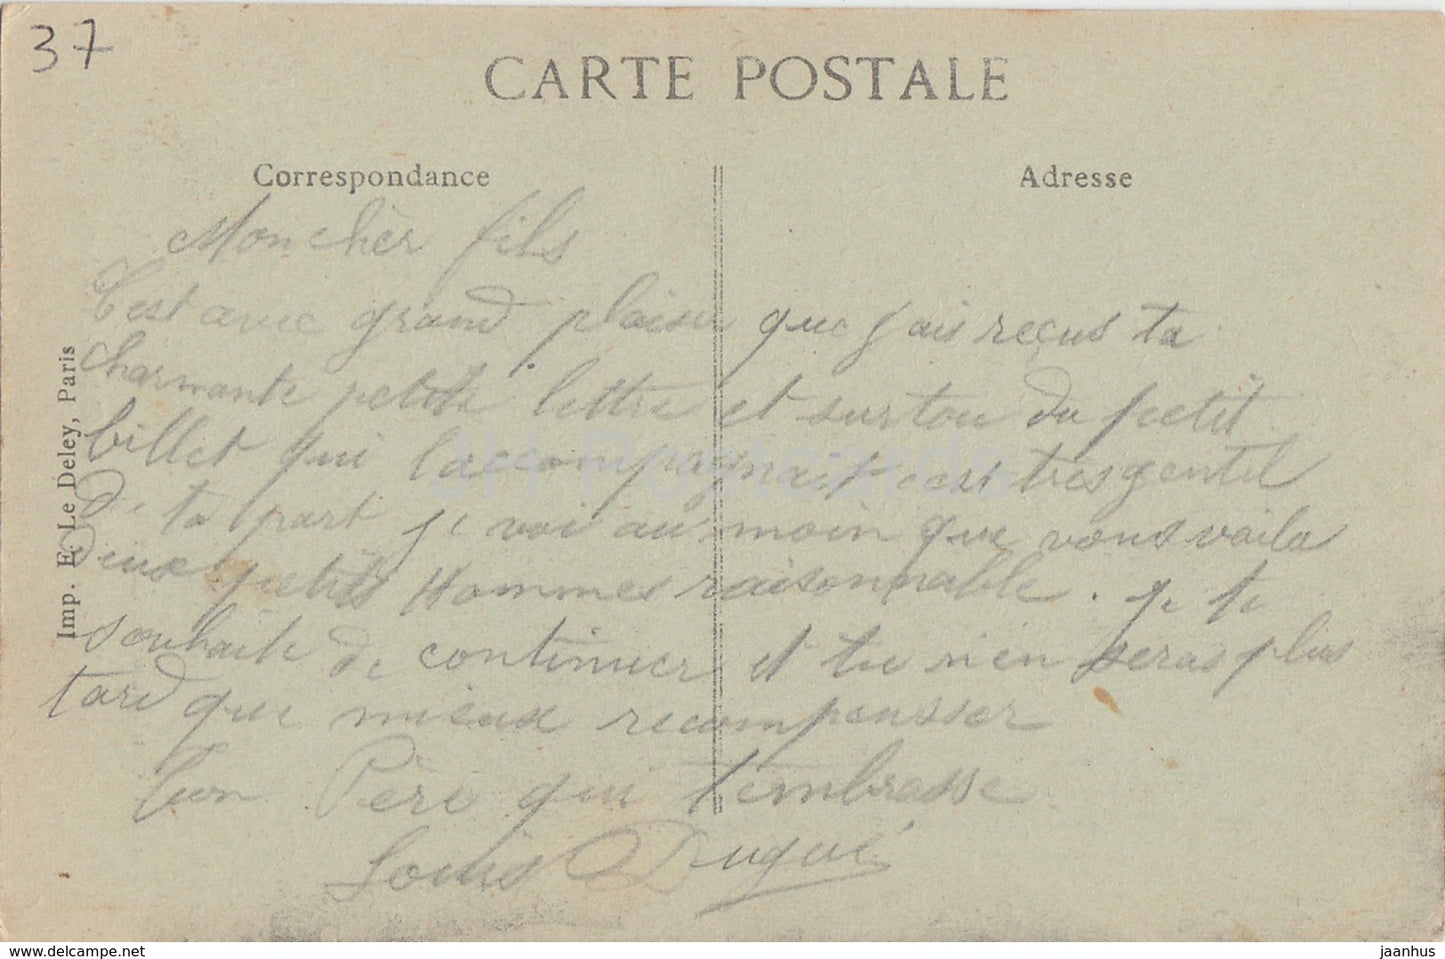 Verneuil - Le Chateau - Vue Nord - Schloss - 62 - alte Postkarte - Frankreich - gebraucht